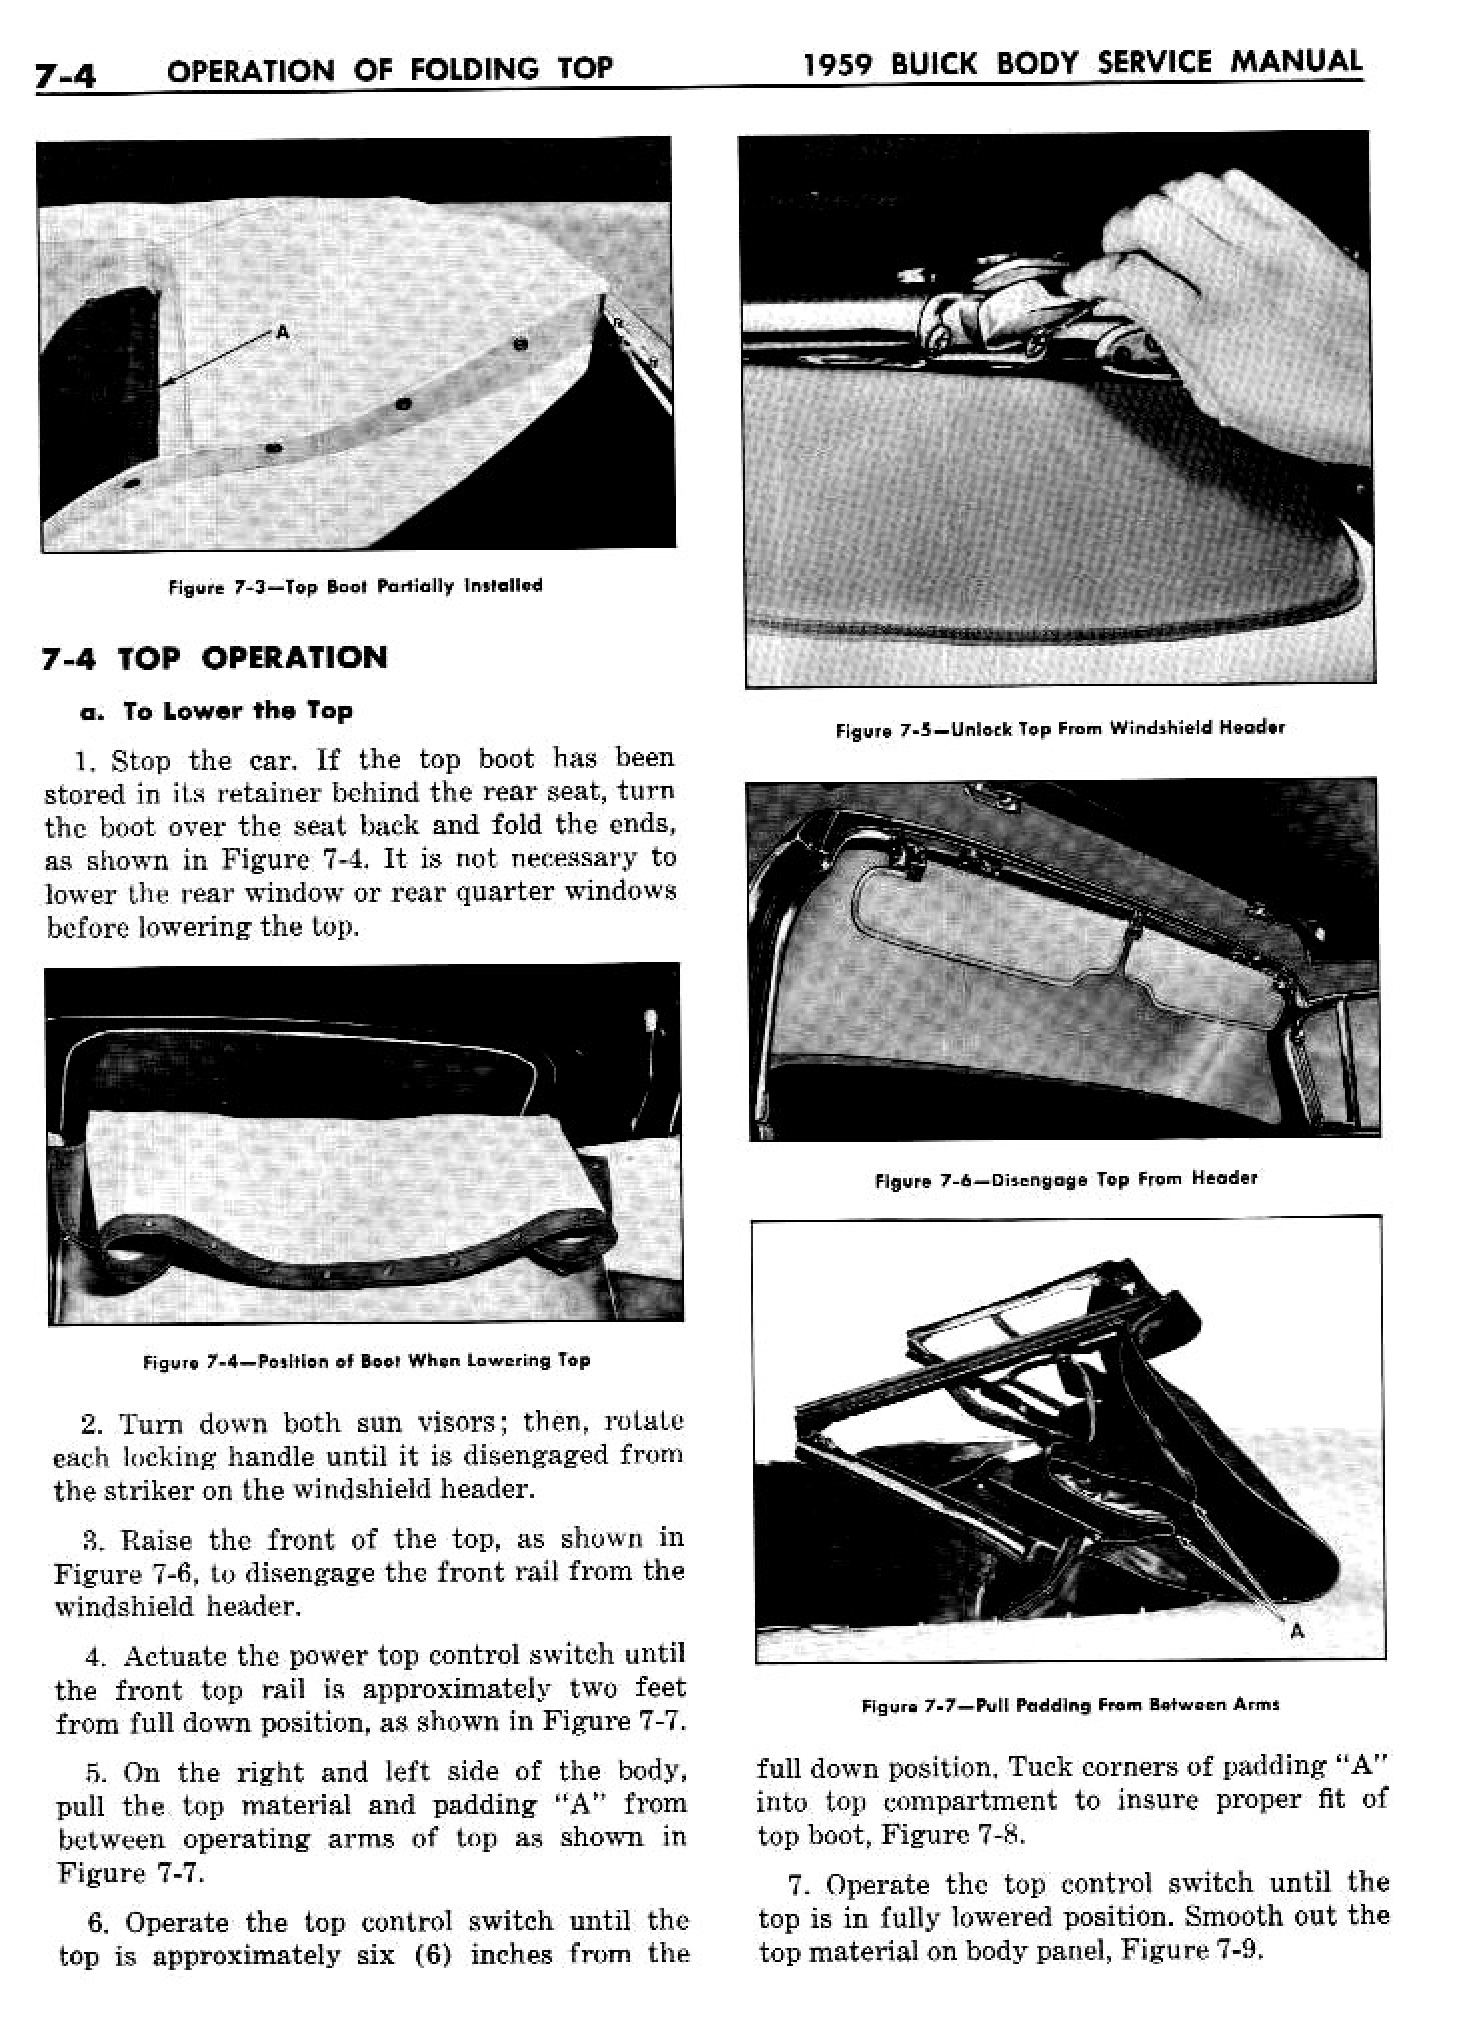 n_08 1959 Buick Body Service-Folding Top_4.jpg